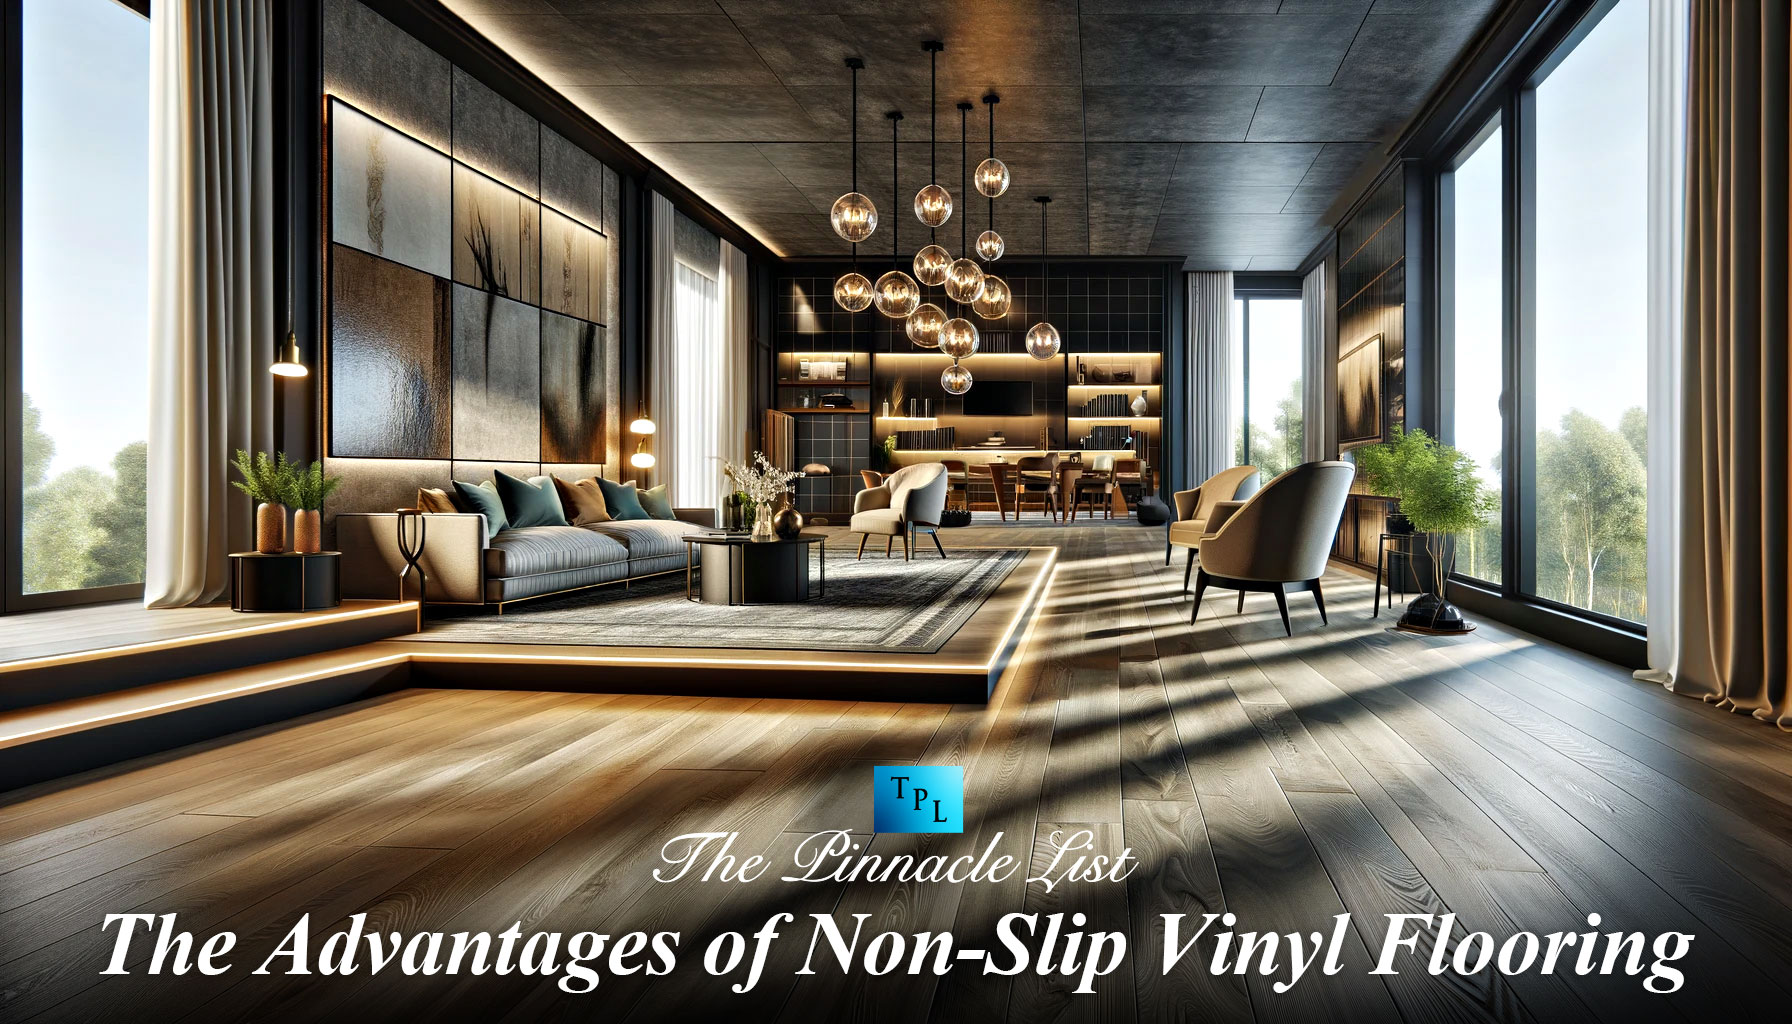 The Advantages of Non-Slip Vinyl Flooring